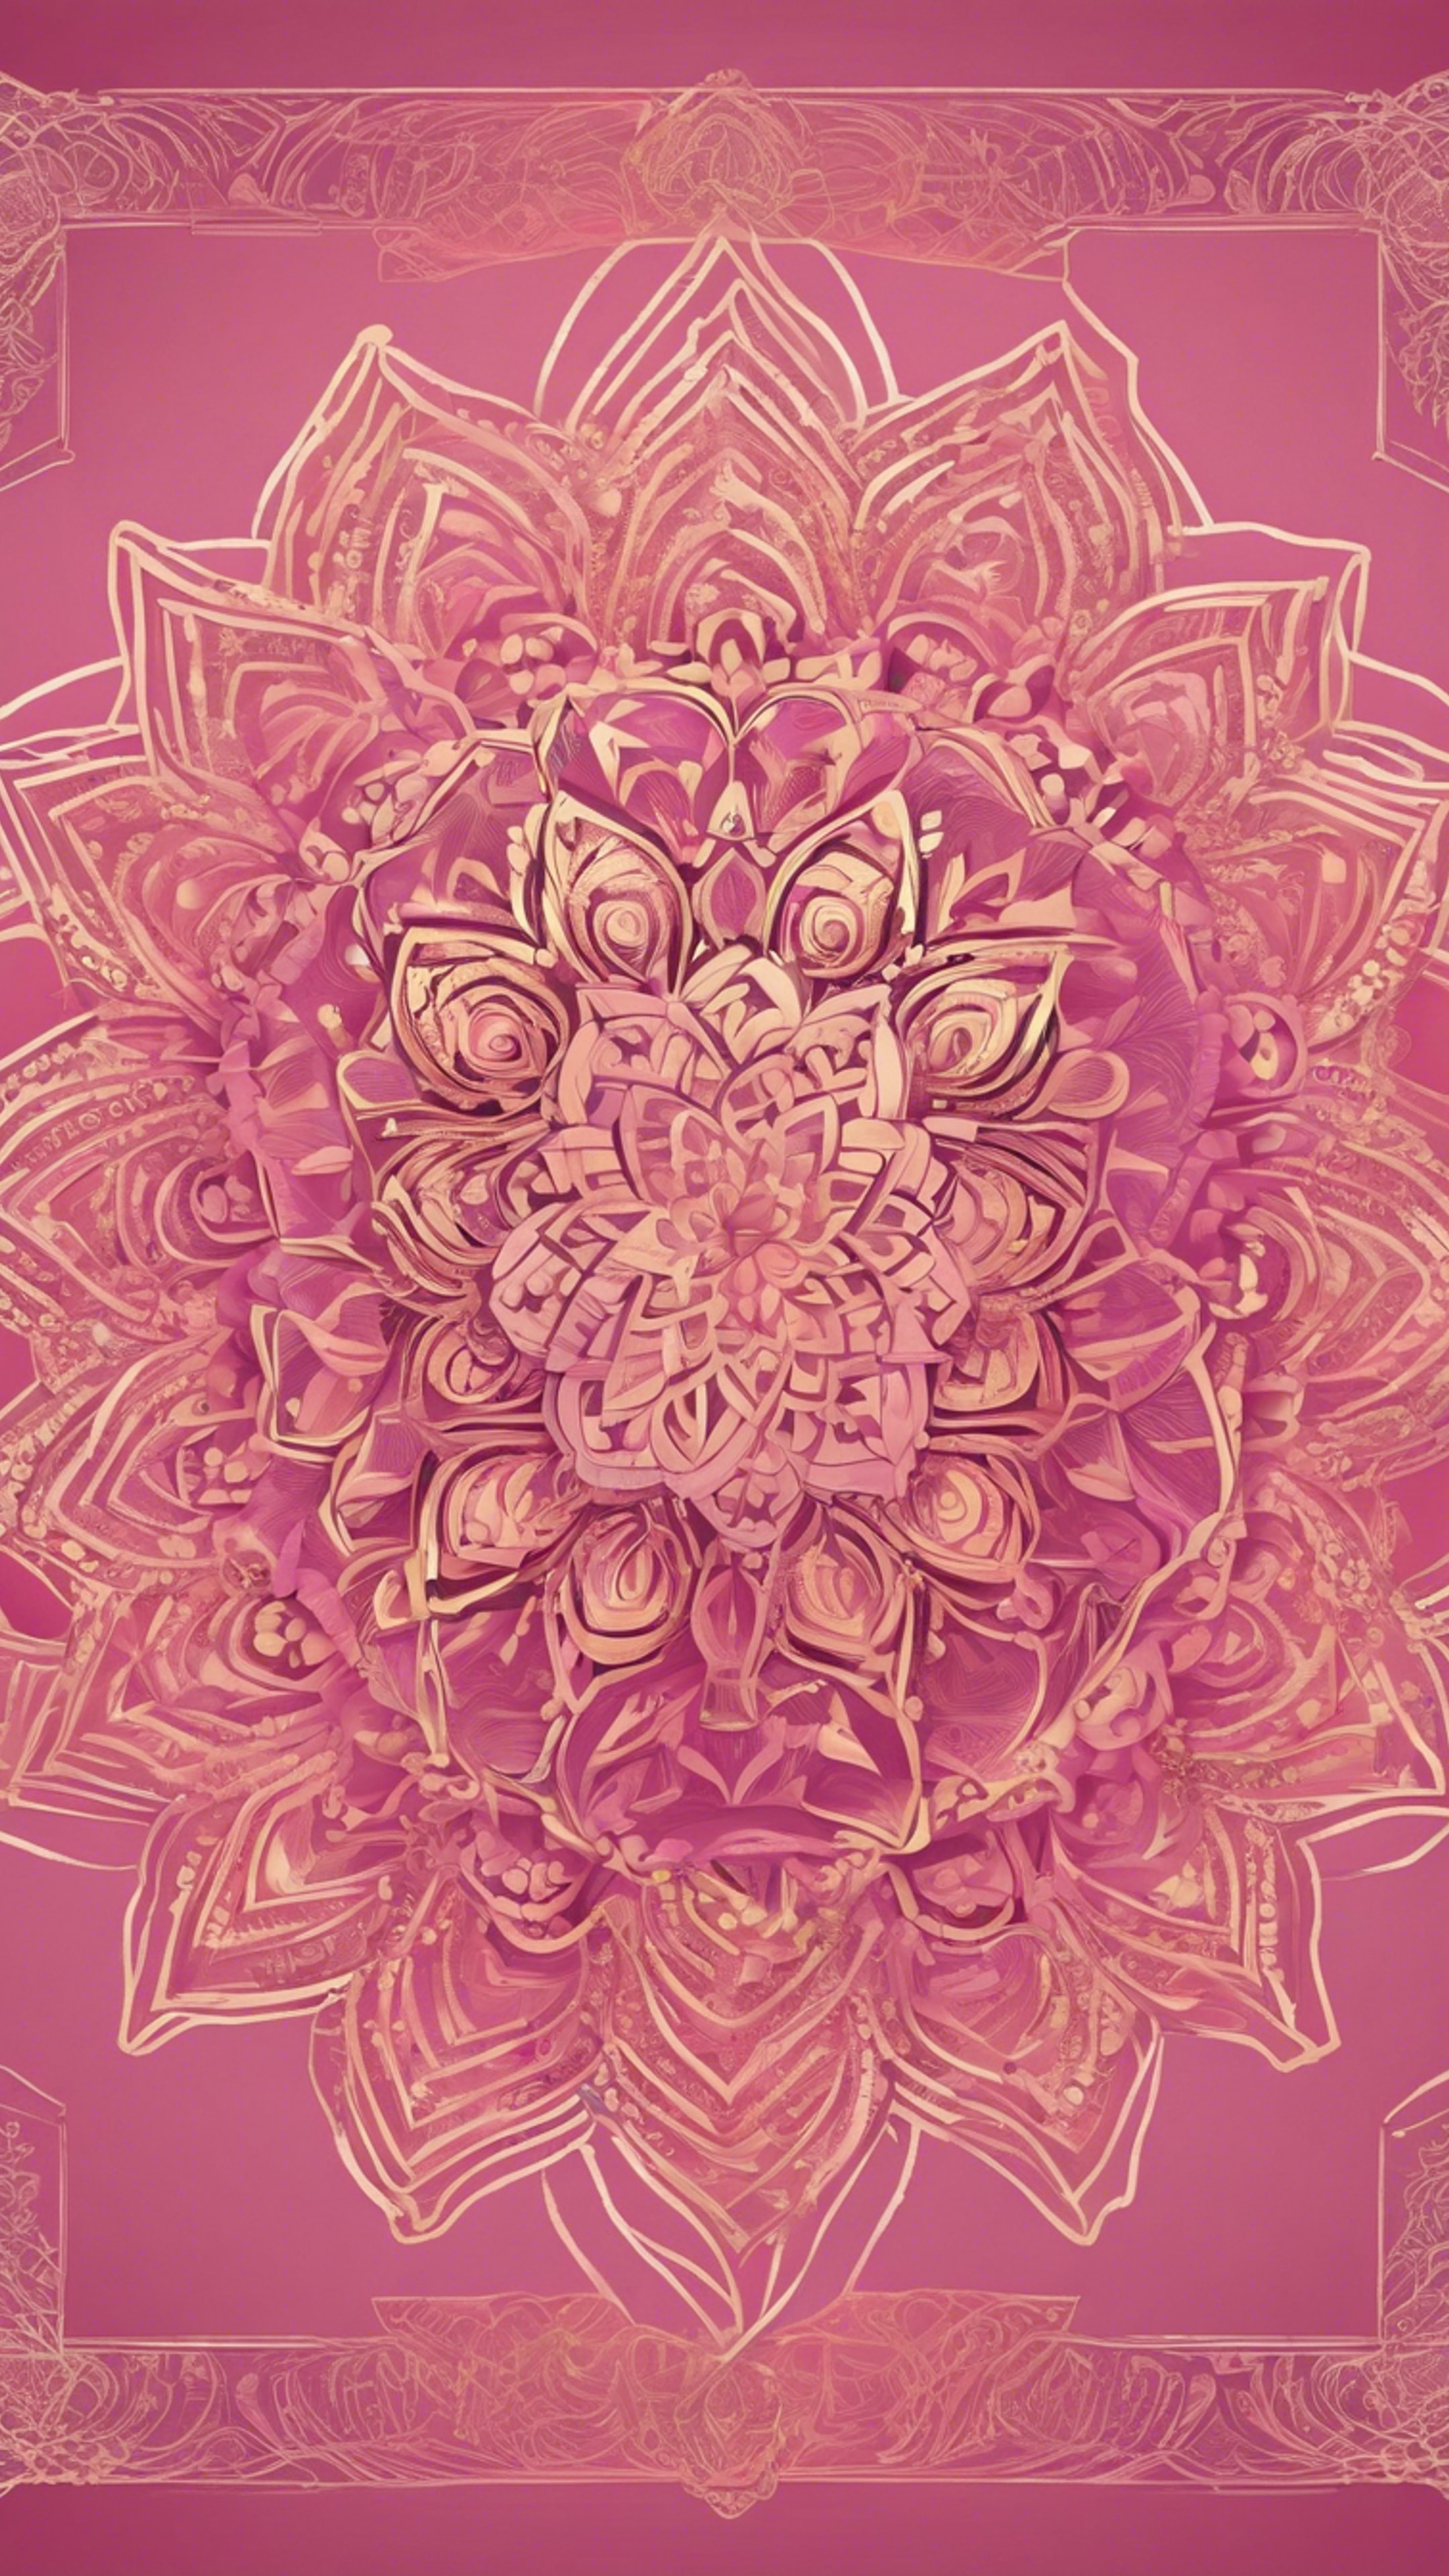 A pink and gold mandala design flourishing with intricate line art and vibrant colors. duvar kağıdı[7f3fcd6ed997428c89d3]